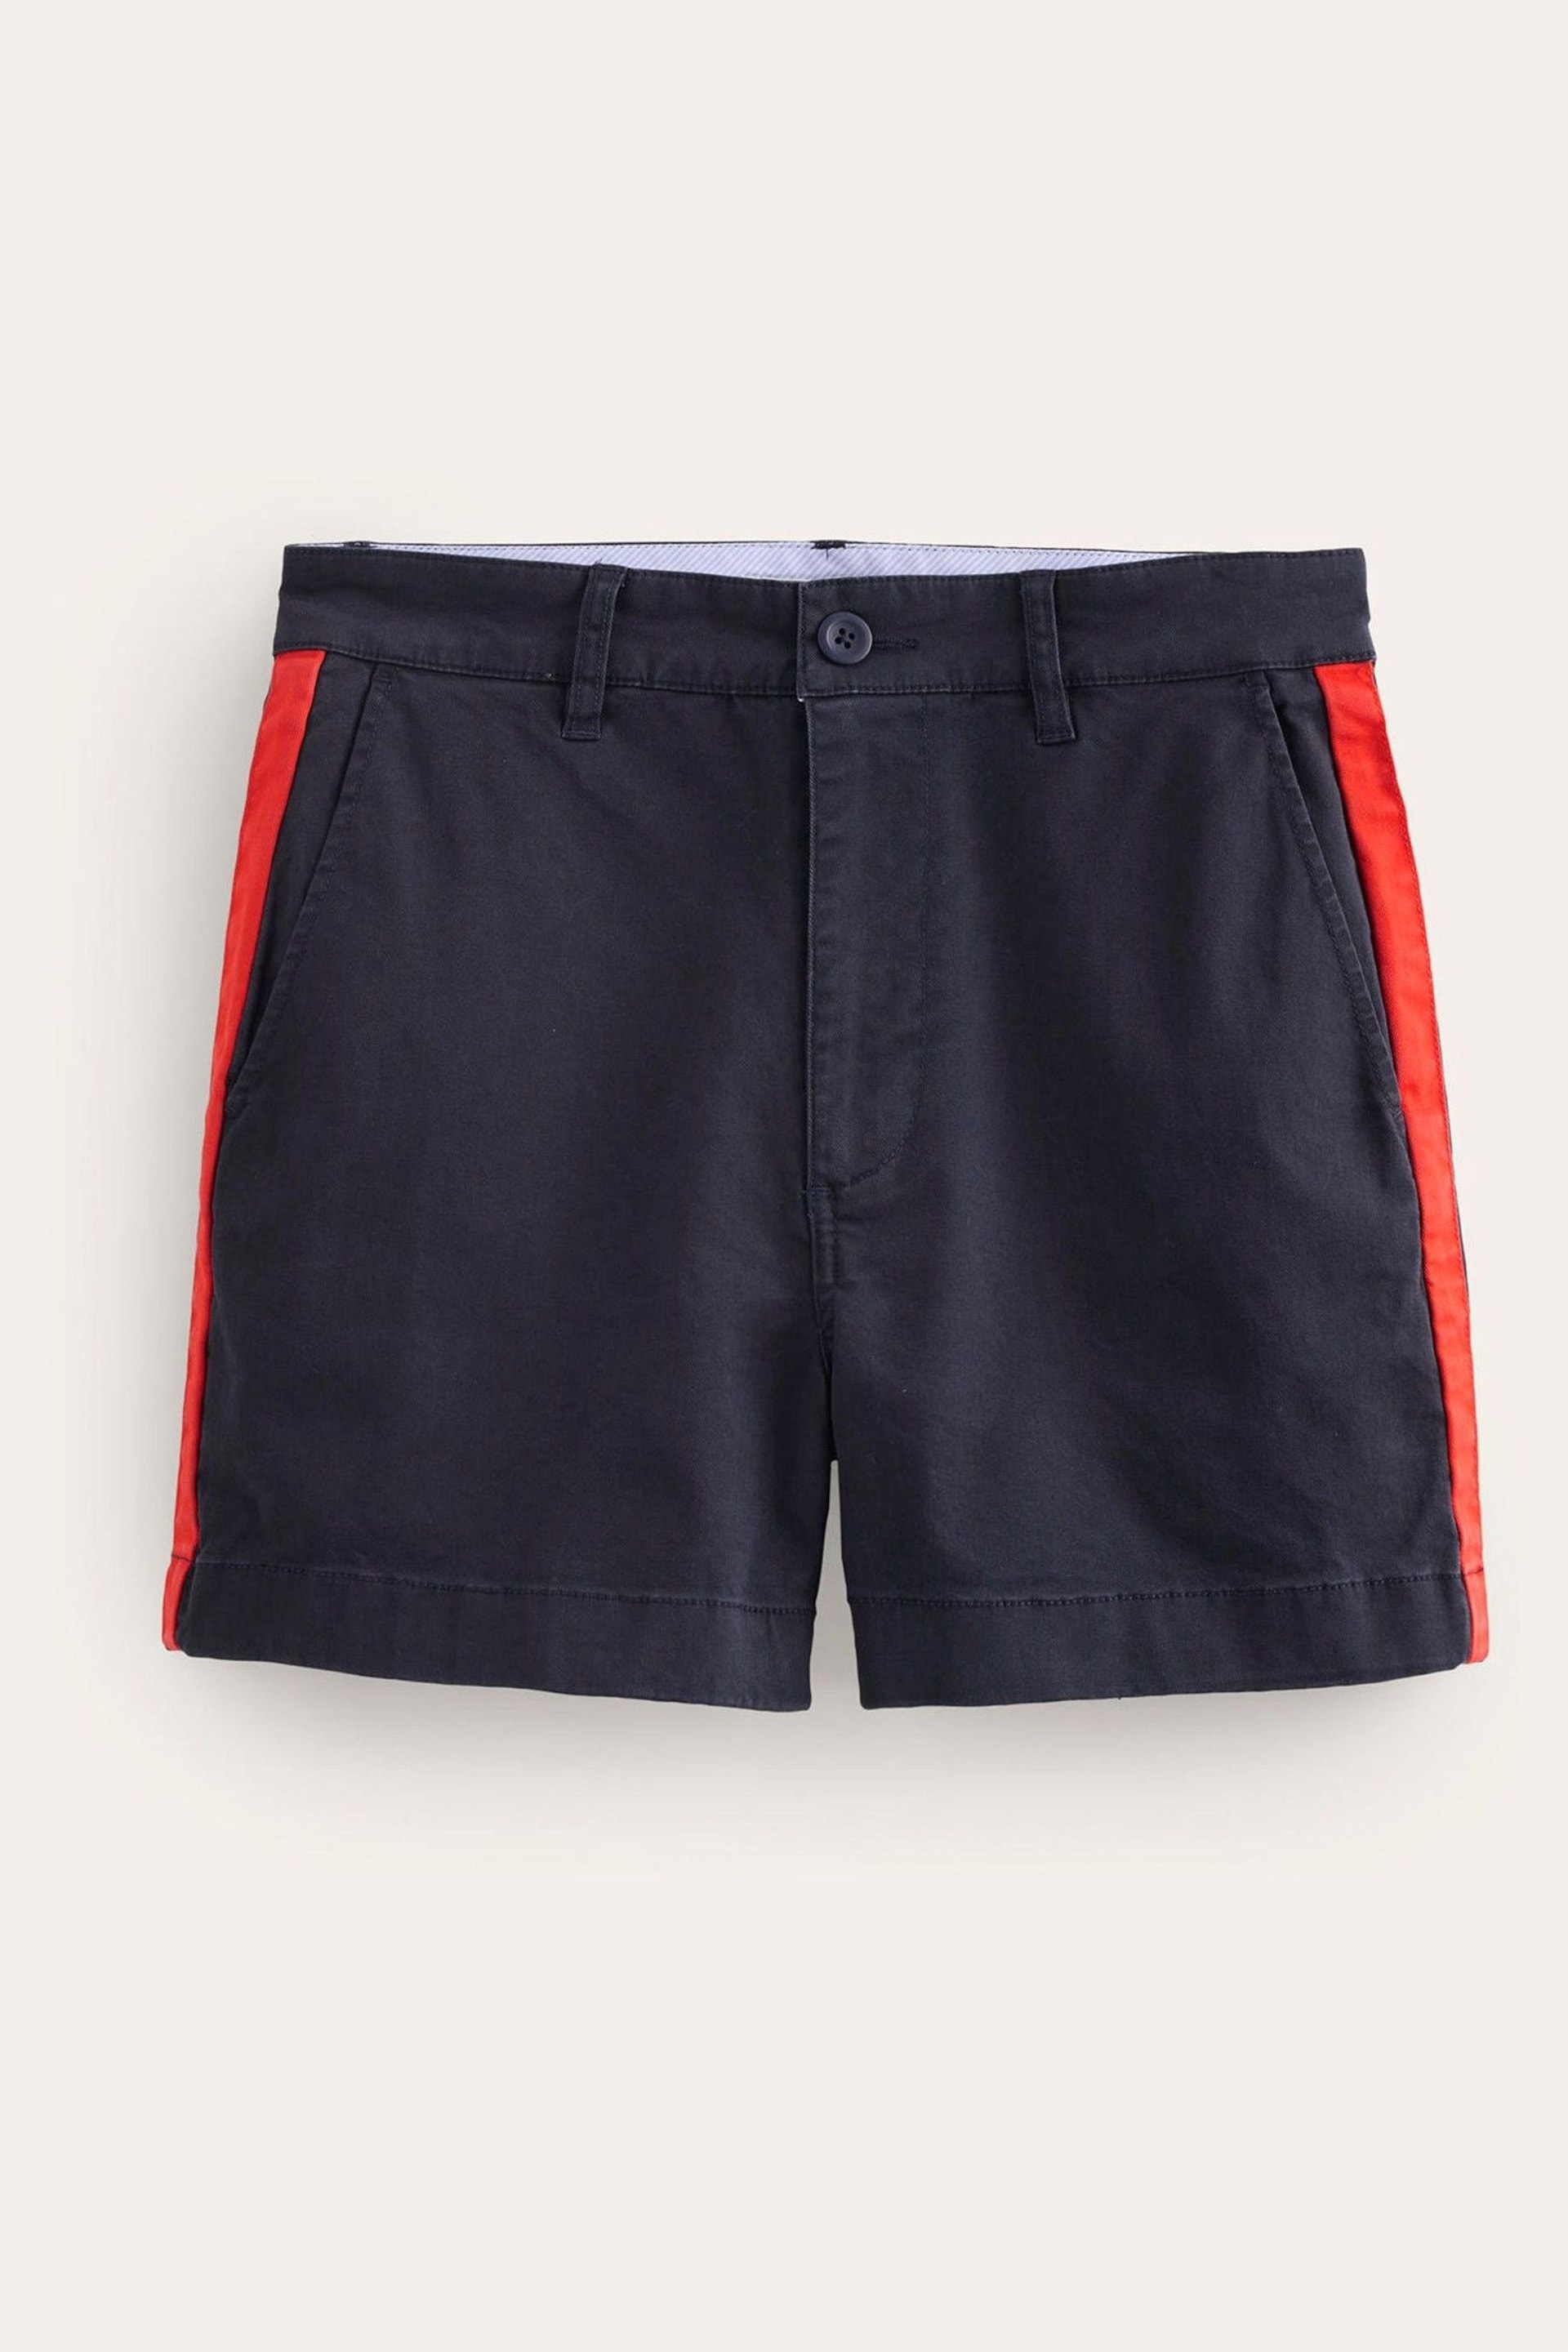 Boden Blue Barnsbury Chino Shorts - Image 5 of 5